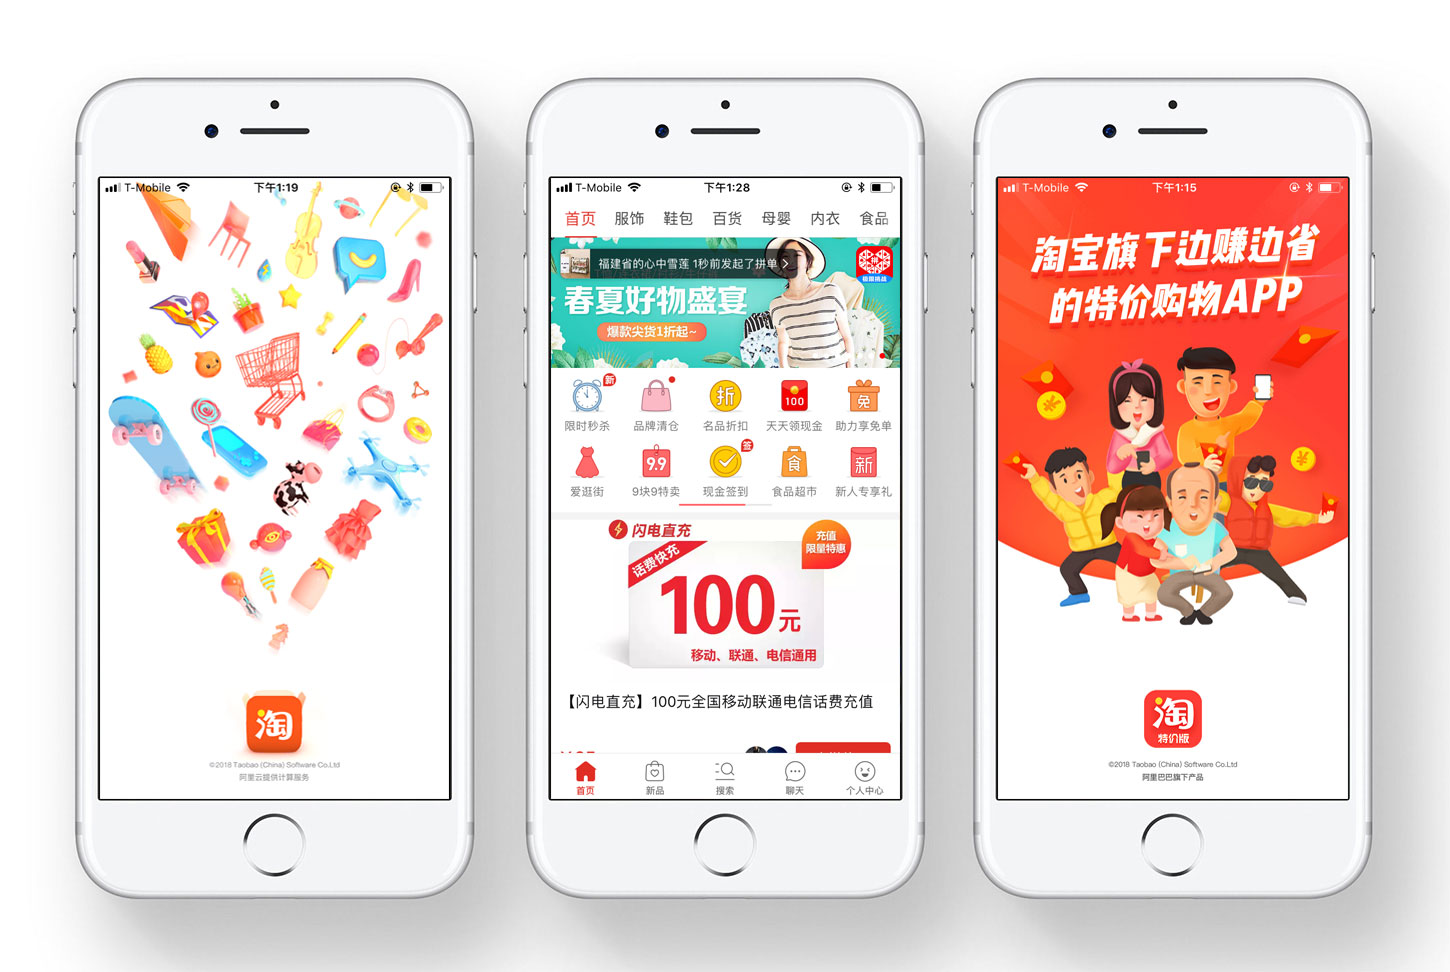 PinDuoDuo Exceeds Taobao in Daily iPhone Downloads for Nine Days Hero Image